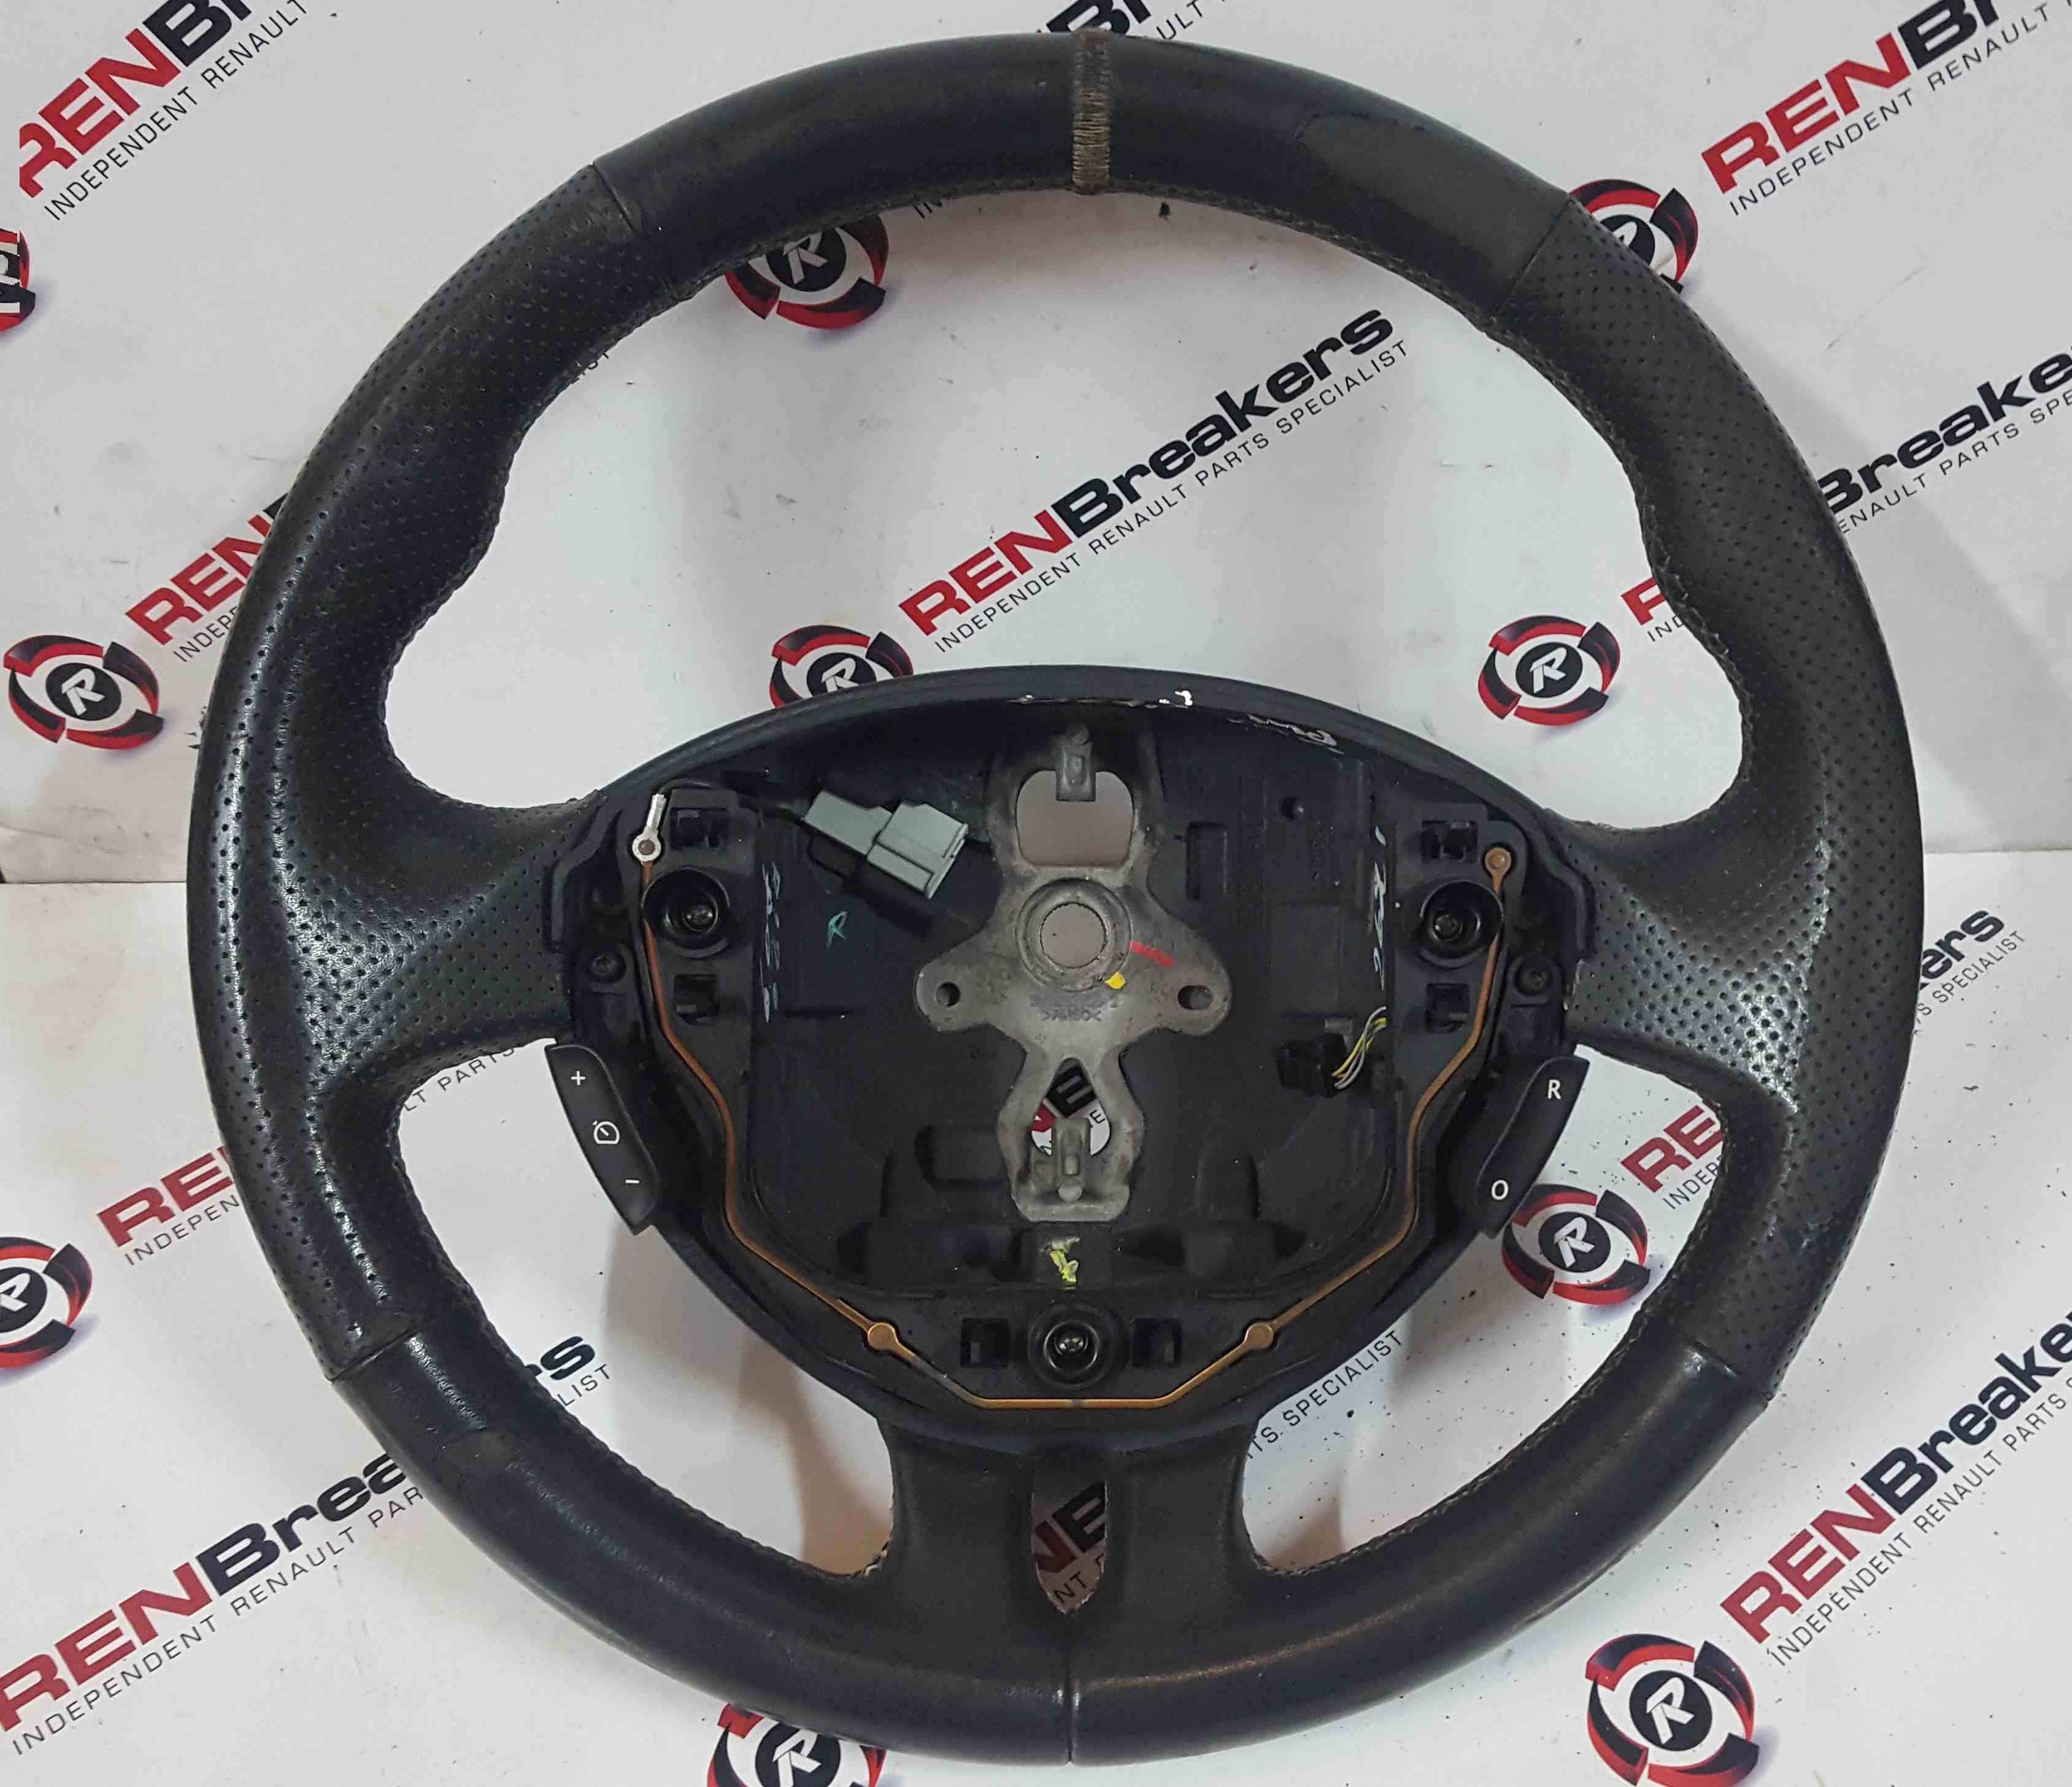 Renault Clio MK3 2005-2009 Steering Wheel Cruise Control WORN